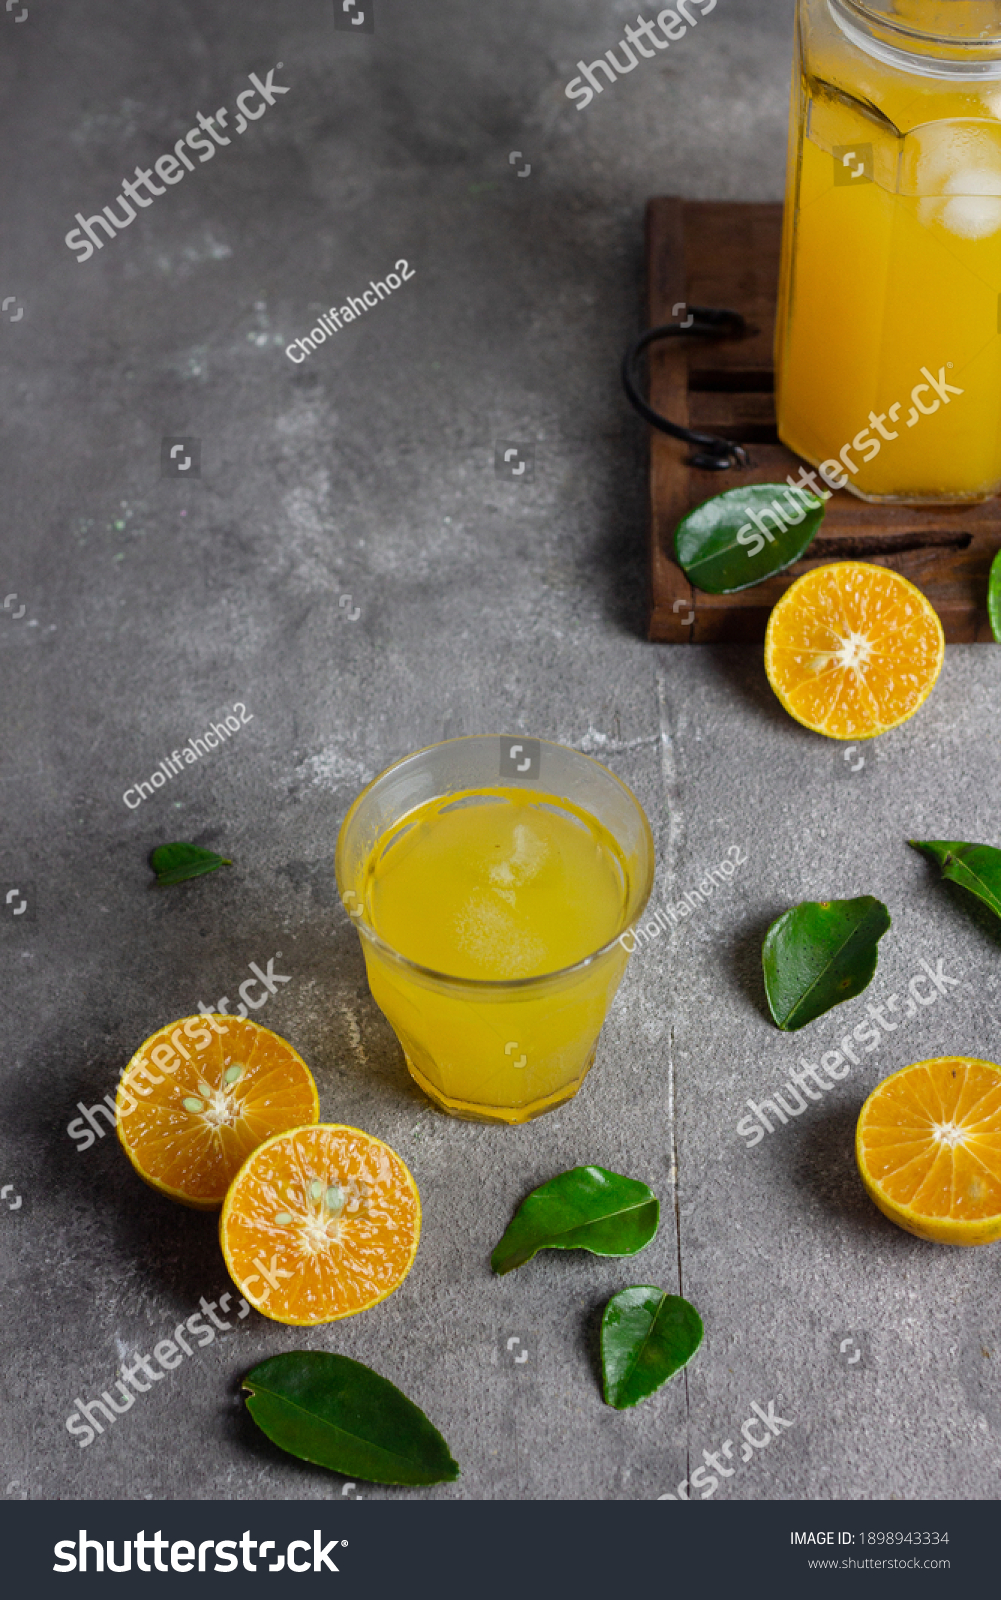 Es Jeruk Peras Orange Juice Iced Stock Photo 1898943334 Shutterstock